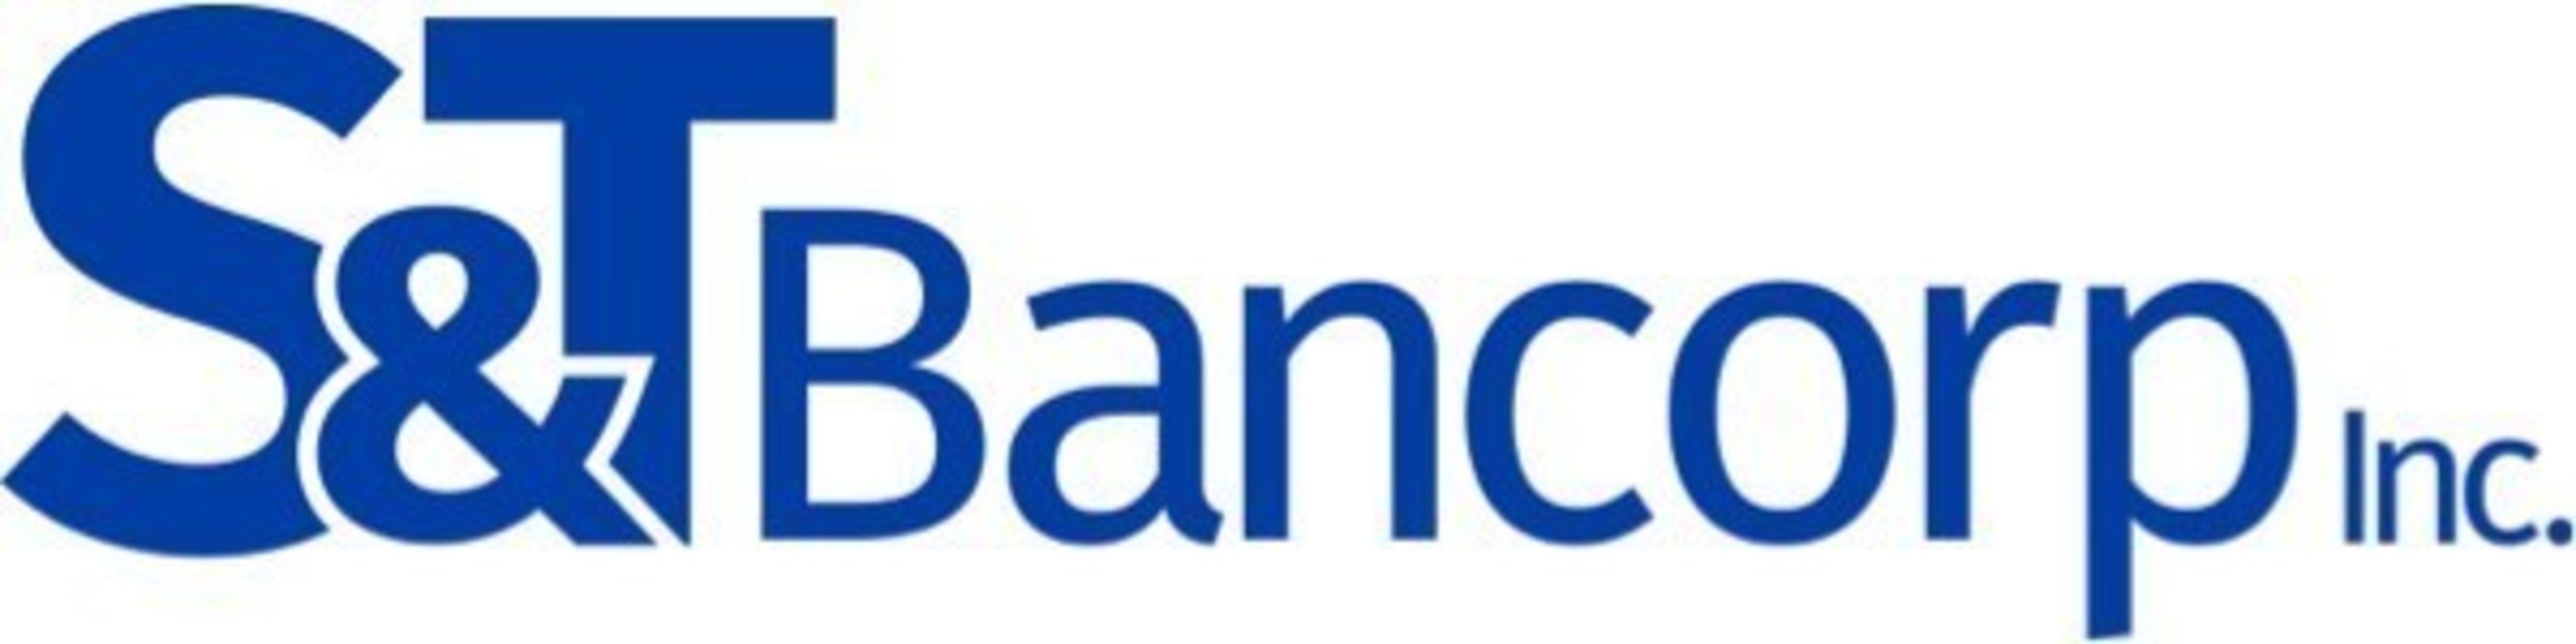 New S&T Bancorp, Inc. logo